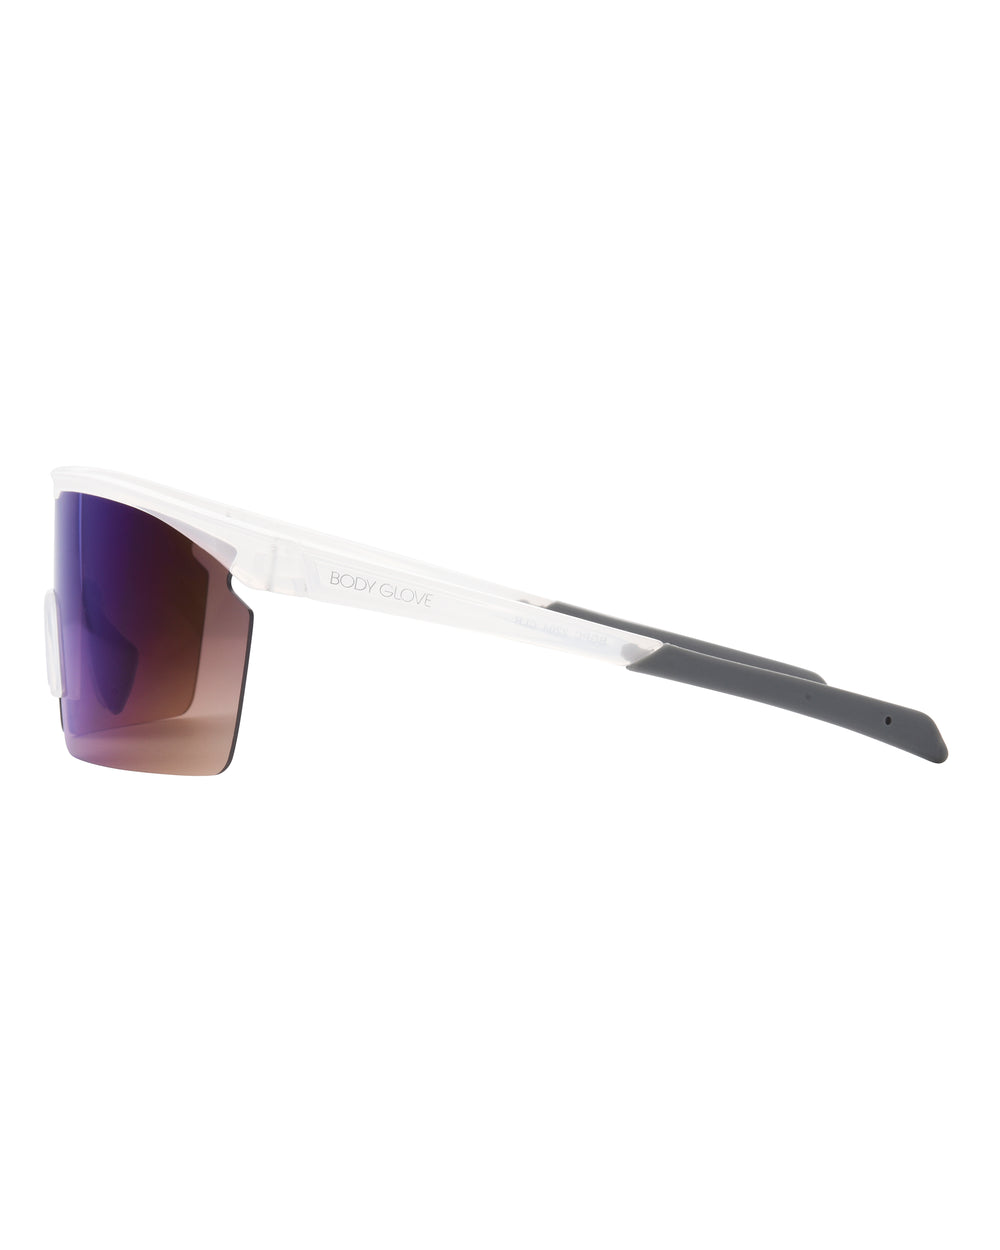 Men's Radiant Blade Sunglasses - Clear